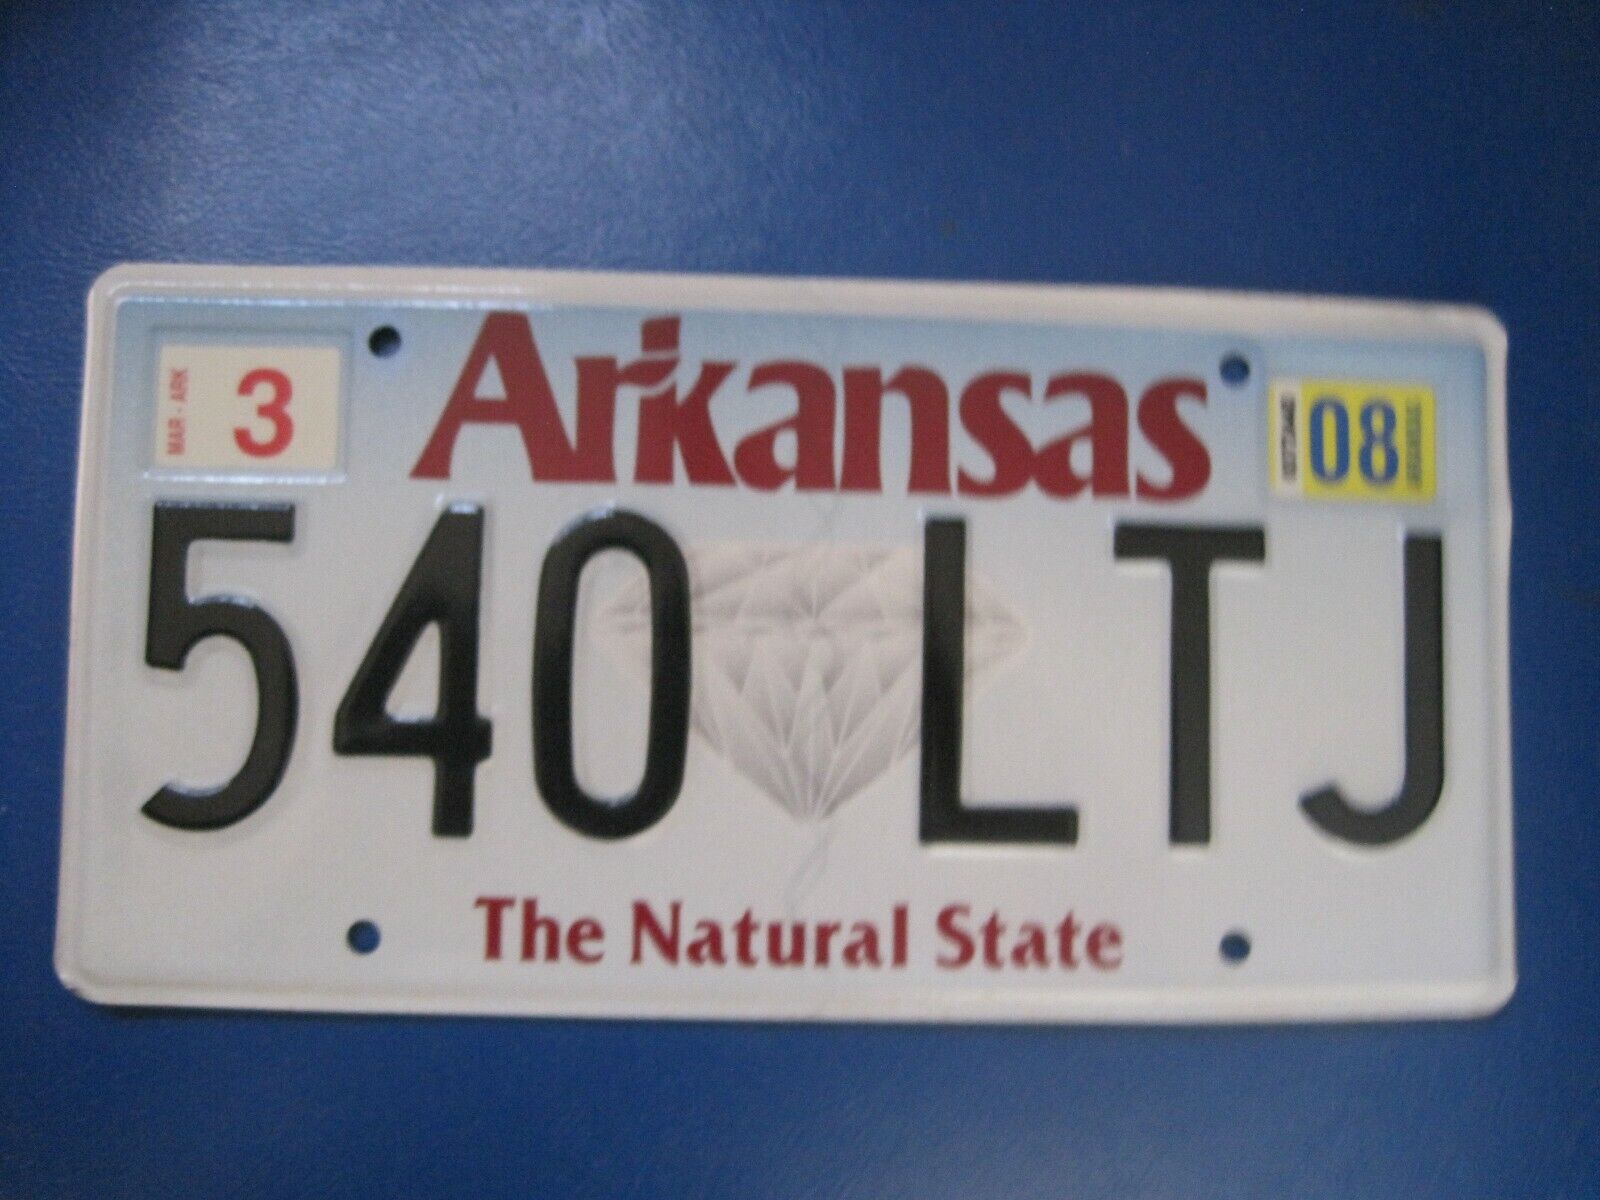 2008 Arkansas The Natural State 540 LTJ License Plate